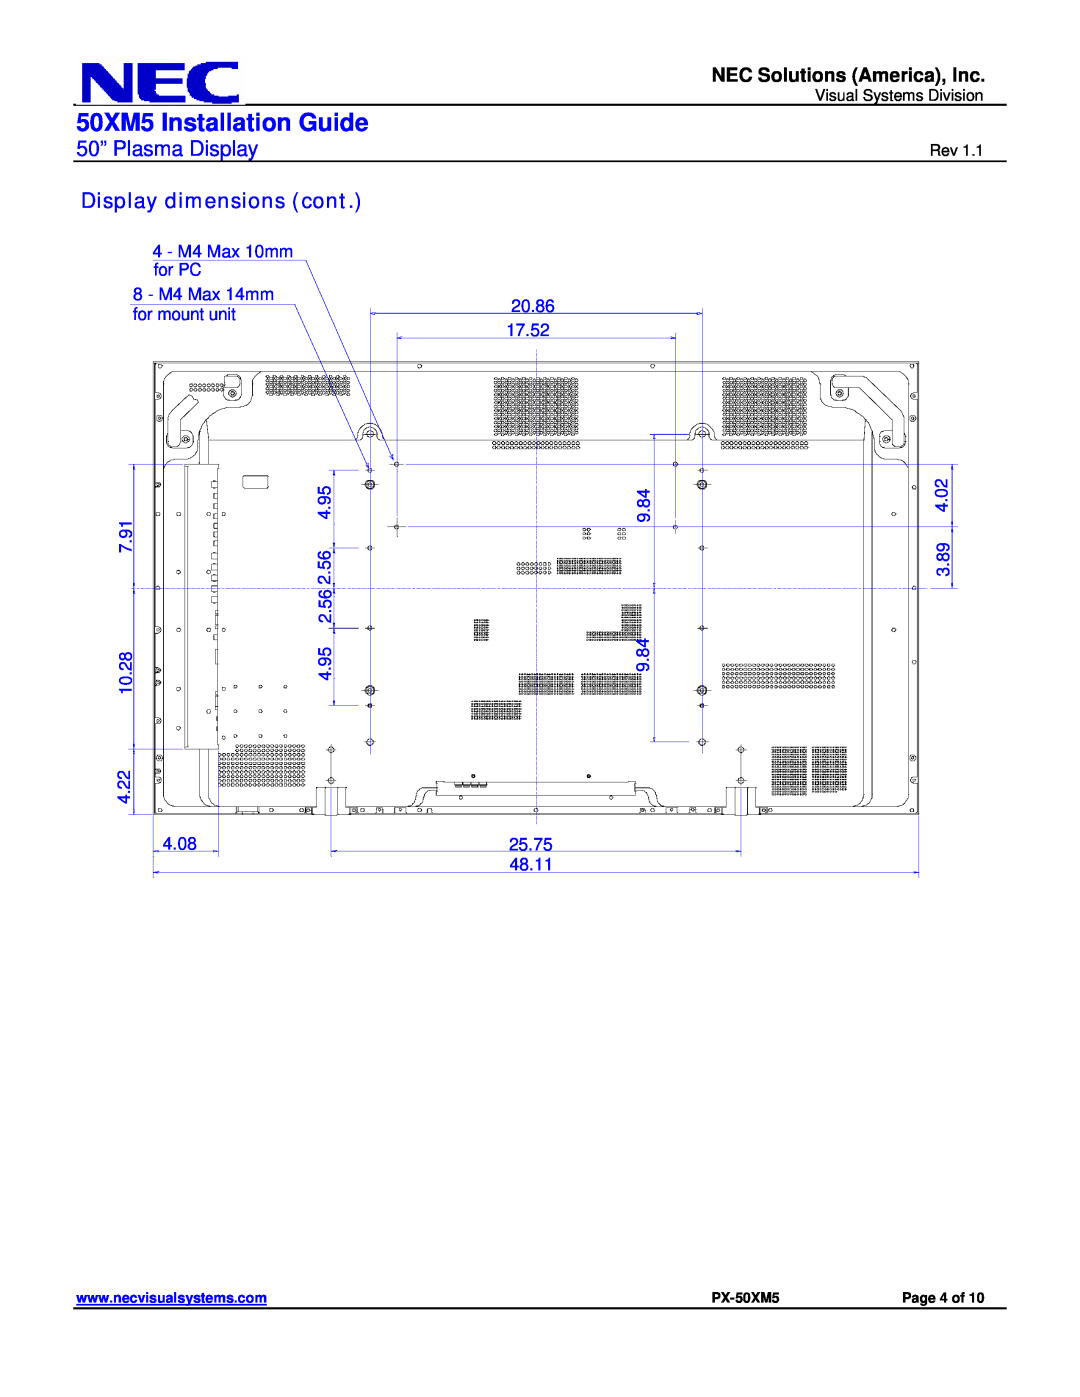 NEC Display dimensions cont, 50XM5 Installation Guide, 50” Plasma Display, NEC Solutions America, Inc 